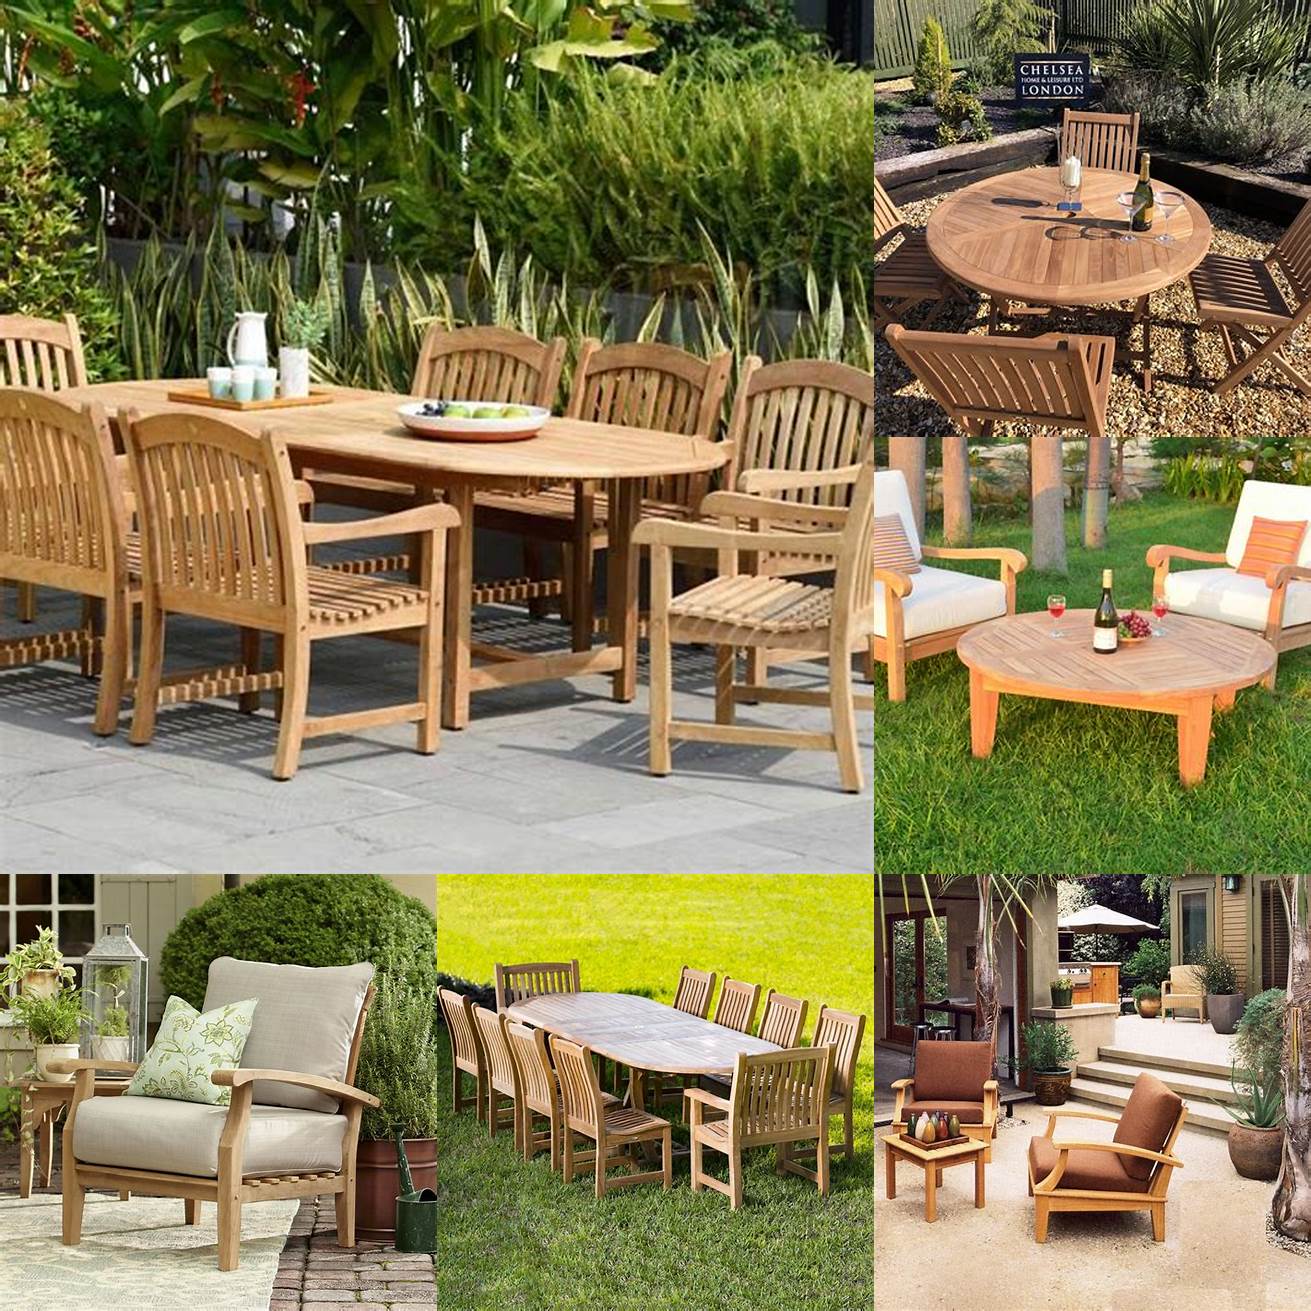 Teak Outdoor Furniture in Different Seasons